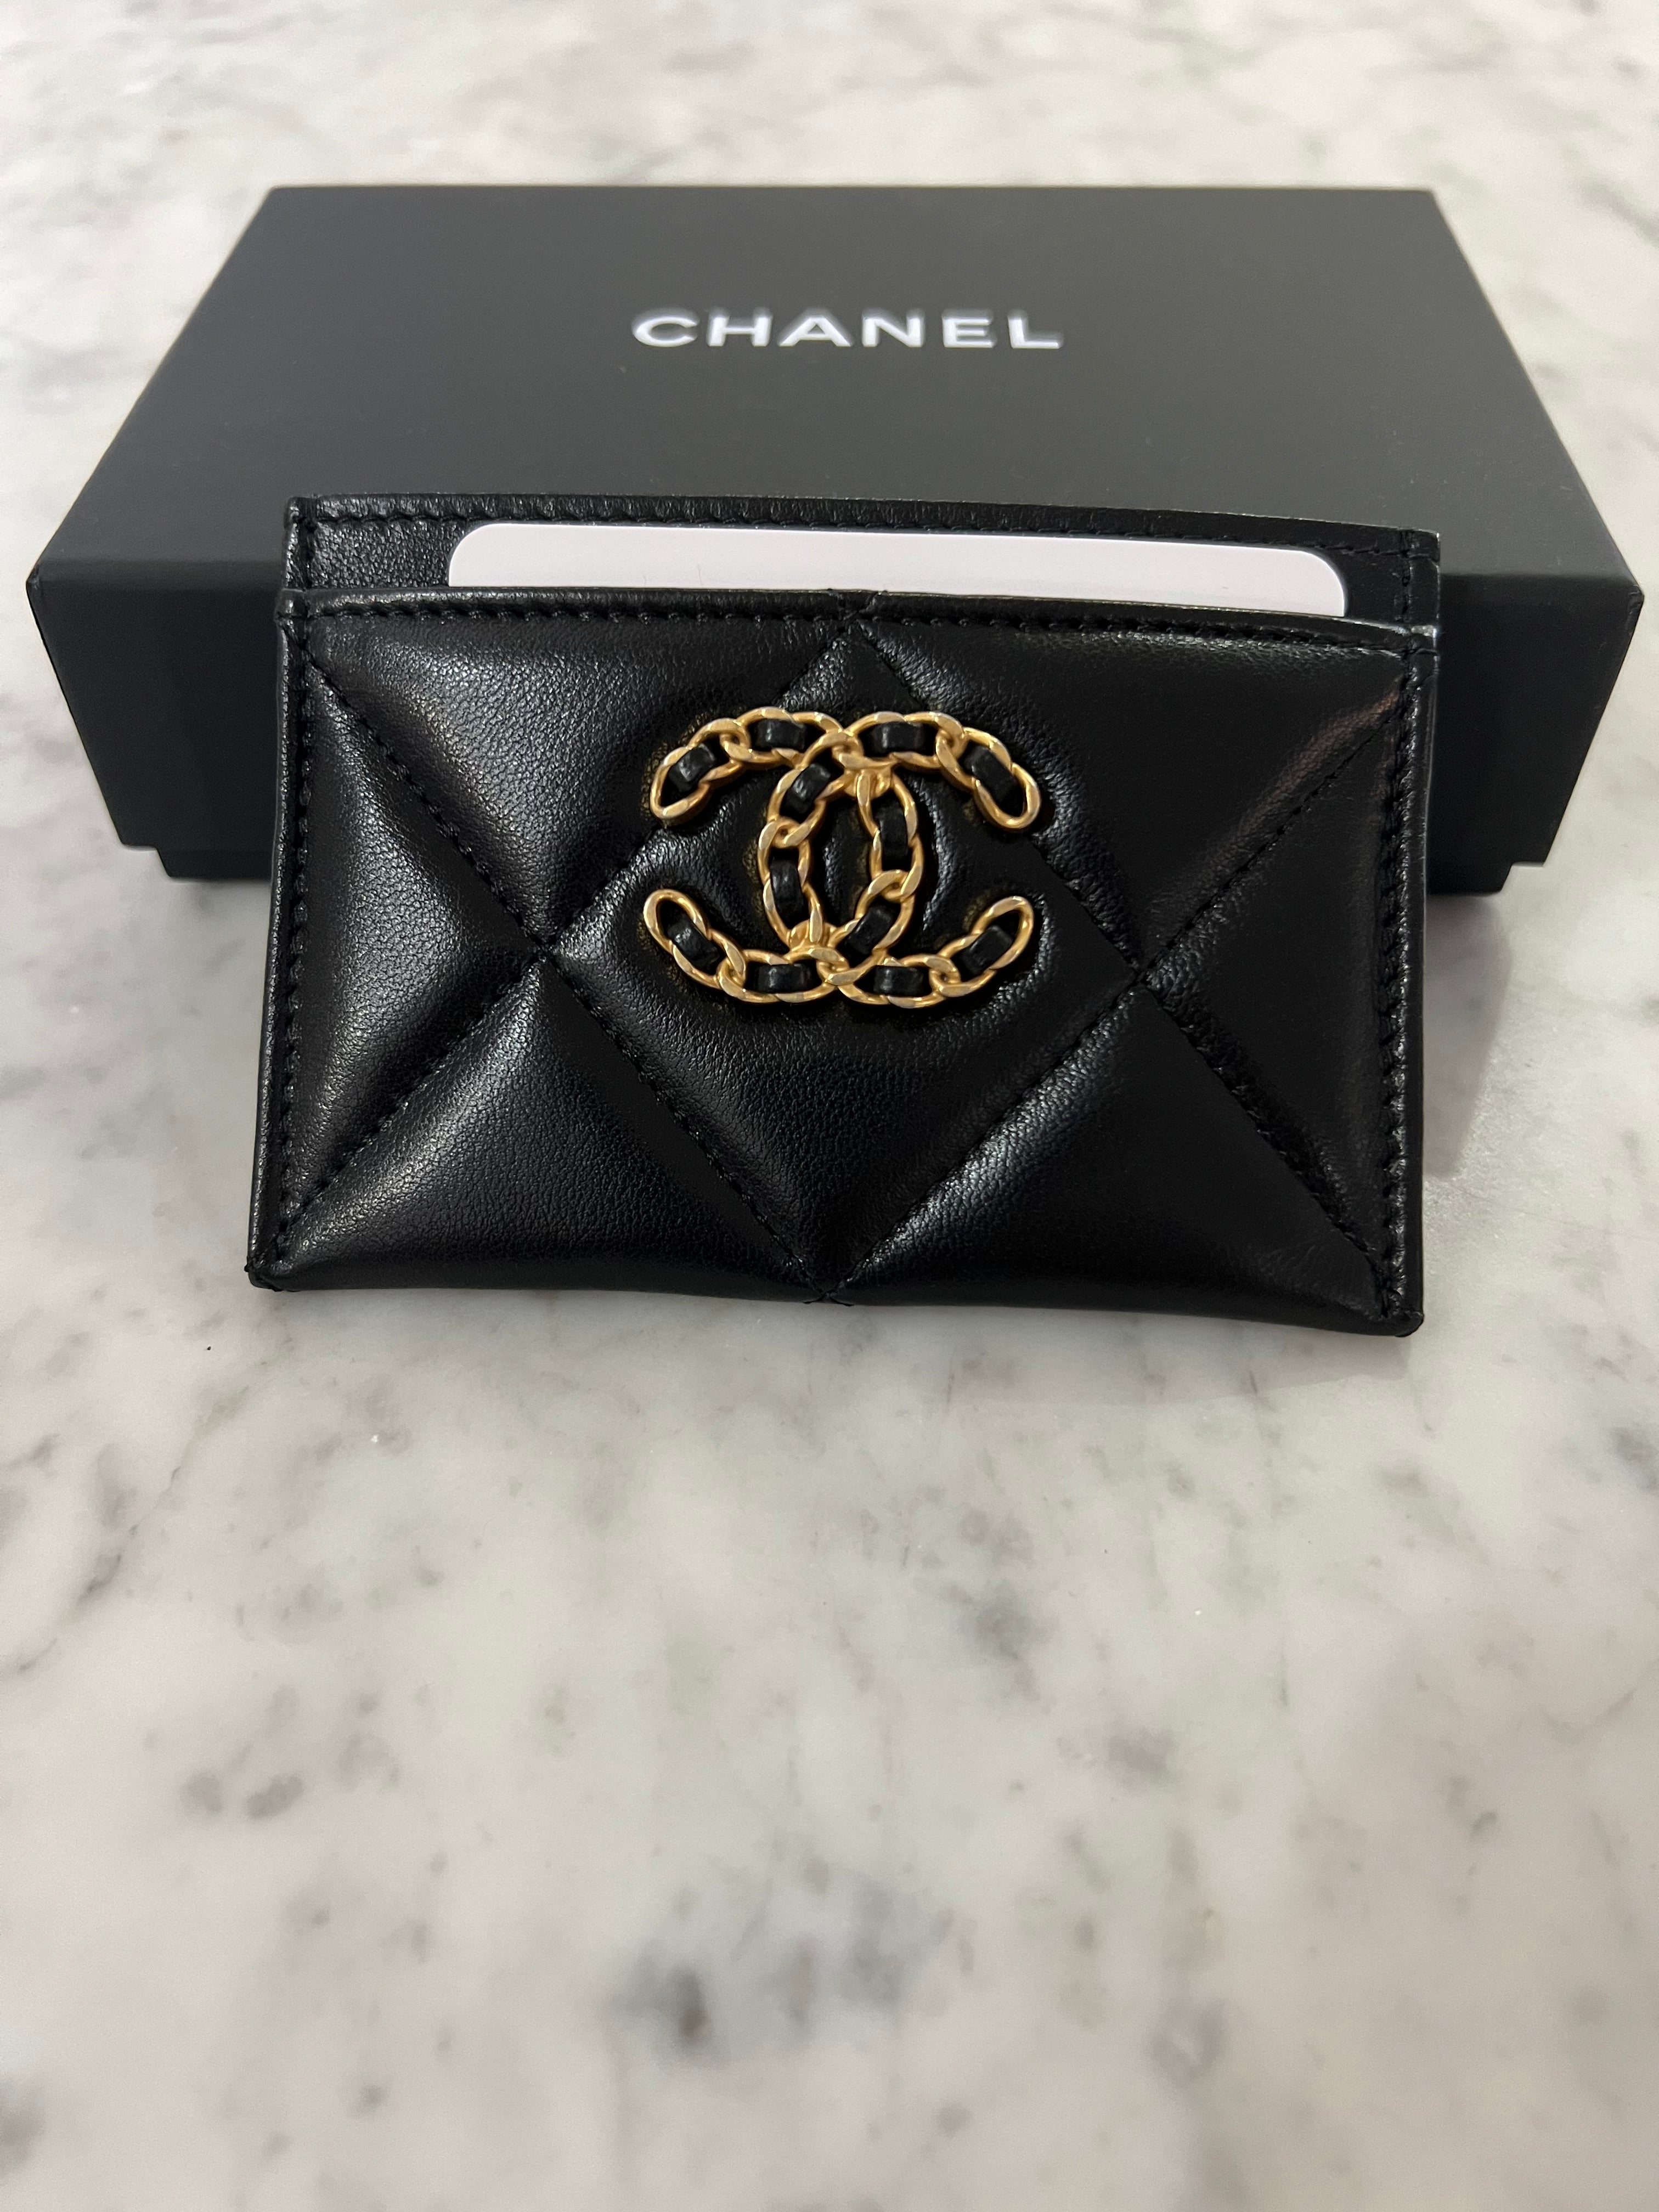 Della Marga - Chanel 19 zip cardholder in black available again